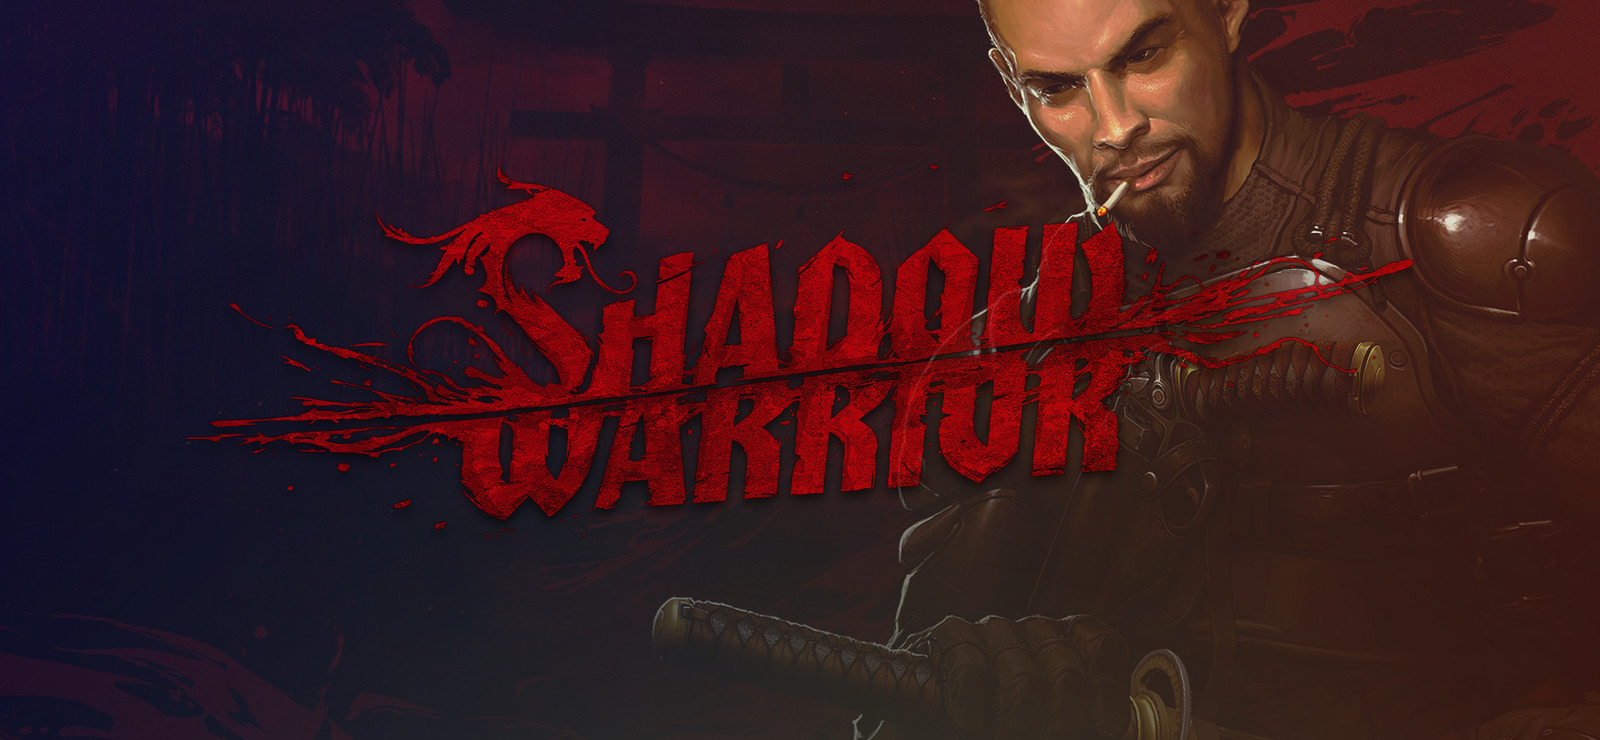 shadow warrior 2 gog download free